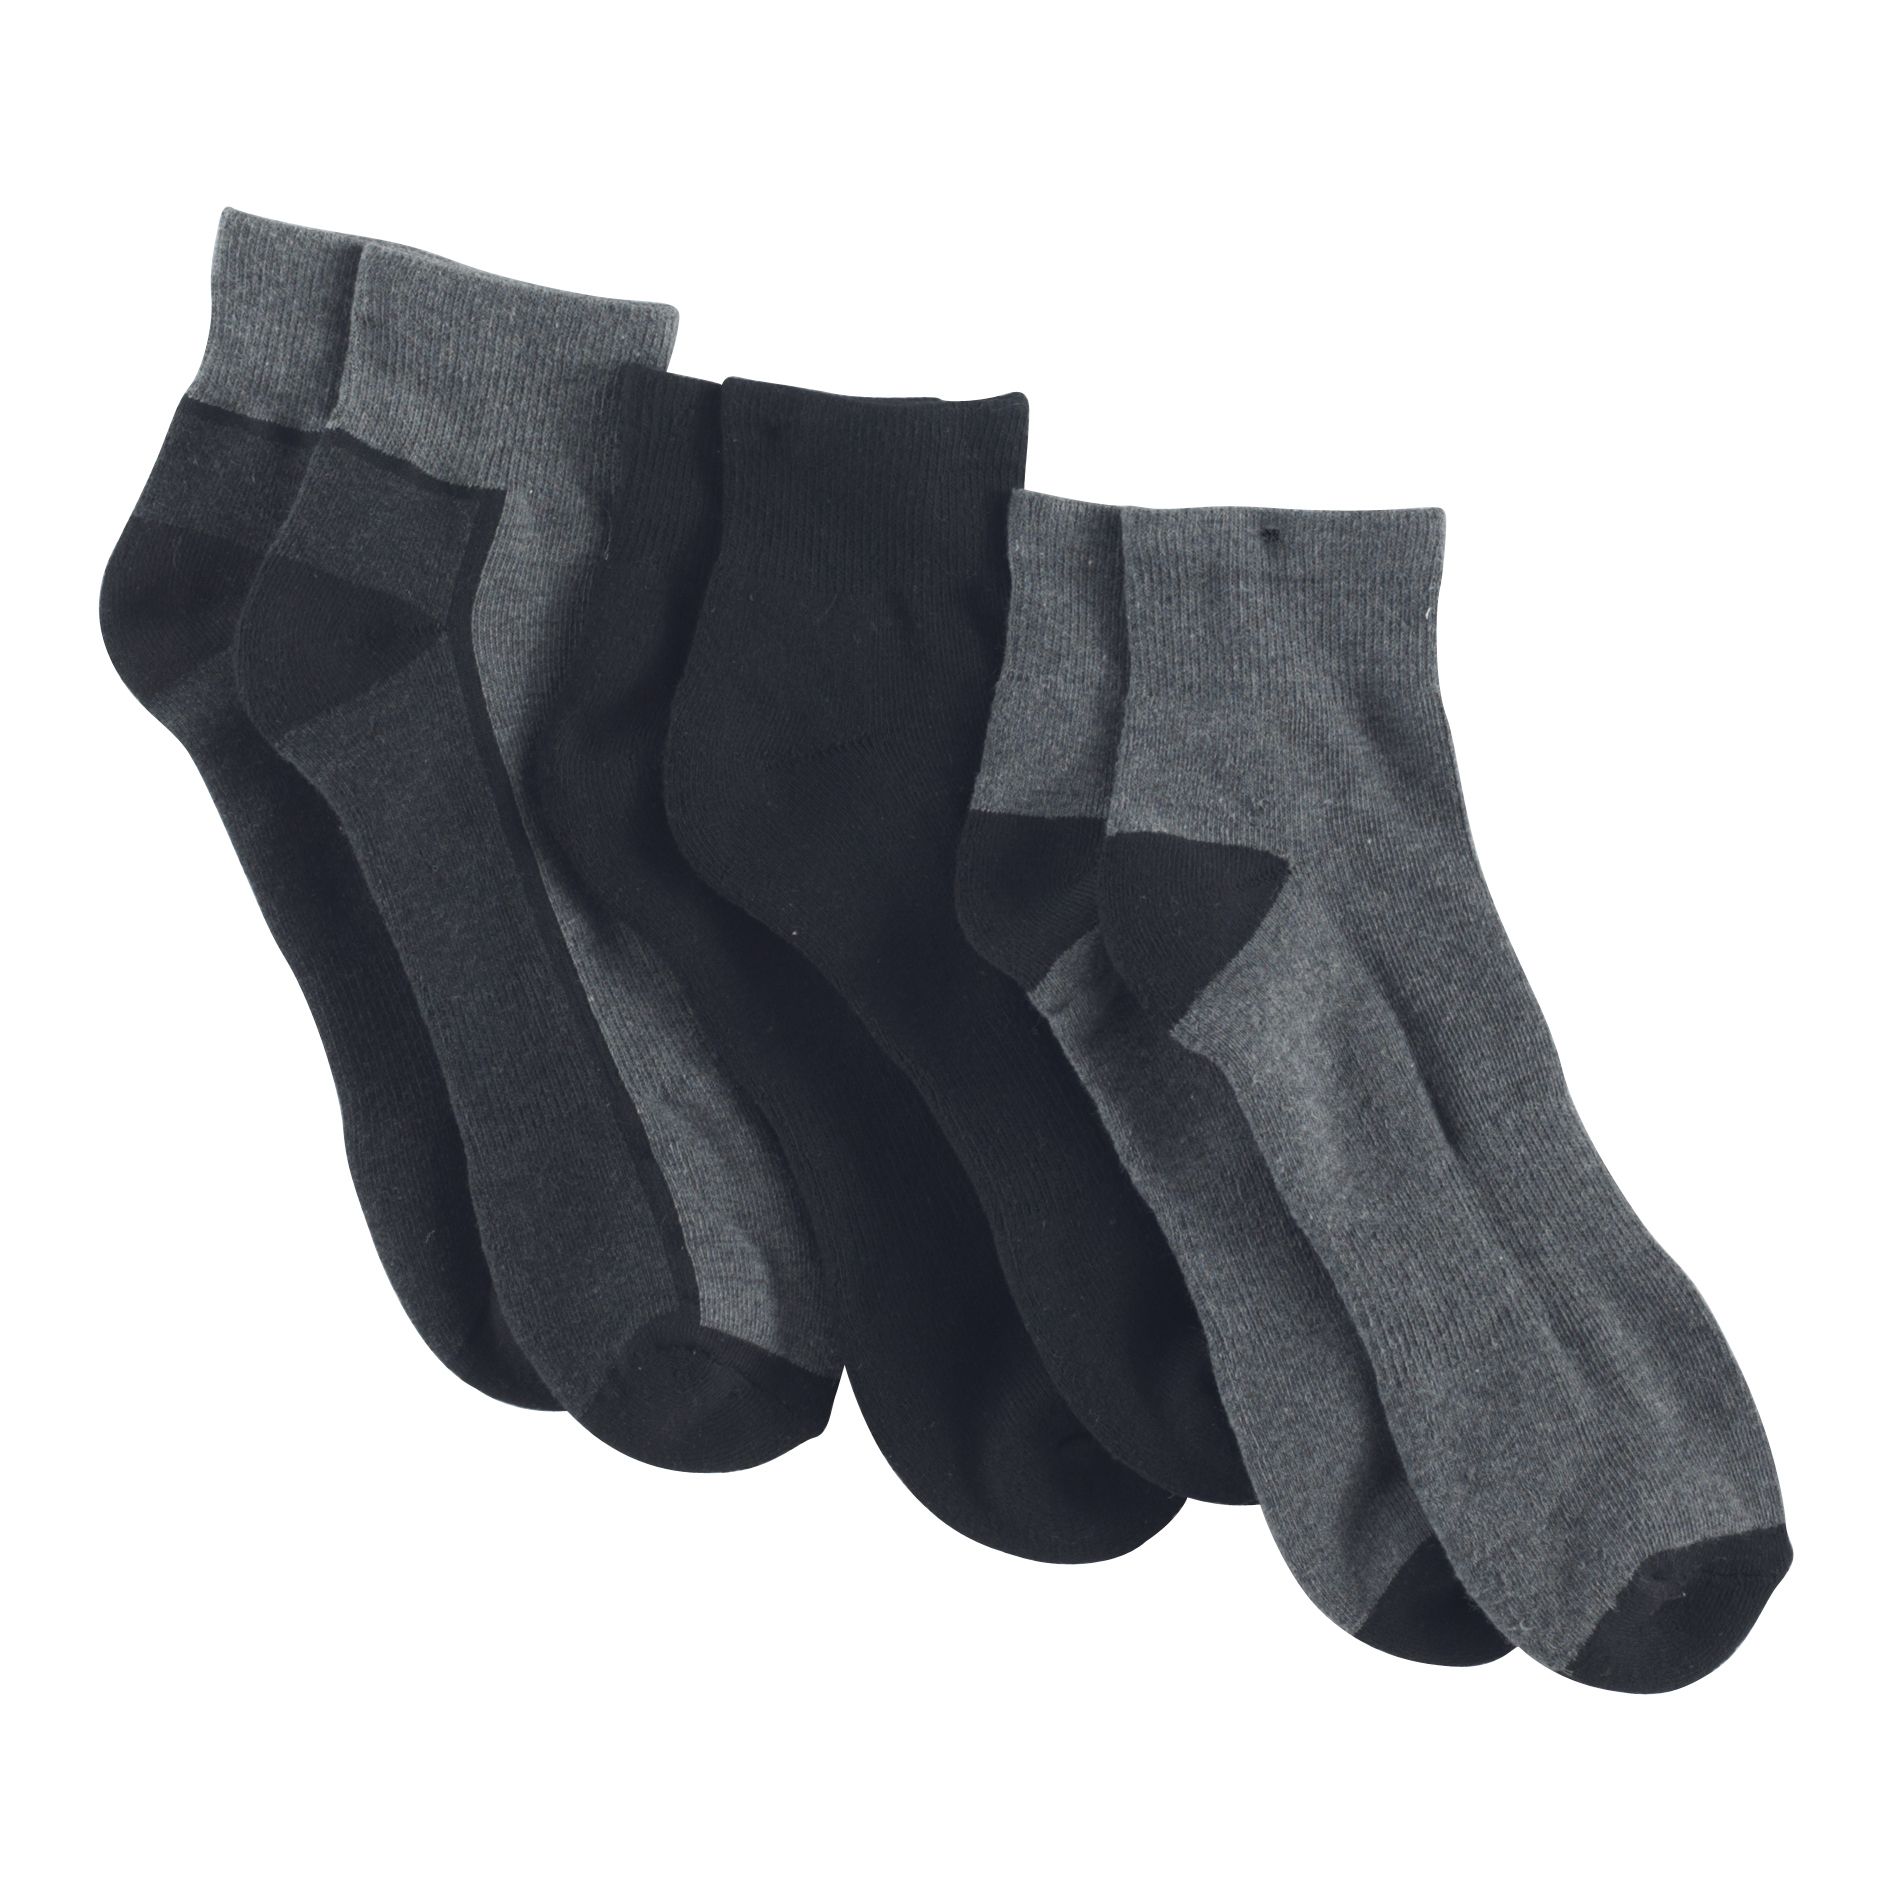 Athletech Men's 3-Pack Color Block Sports Quarter Socks